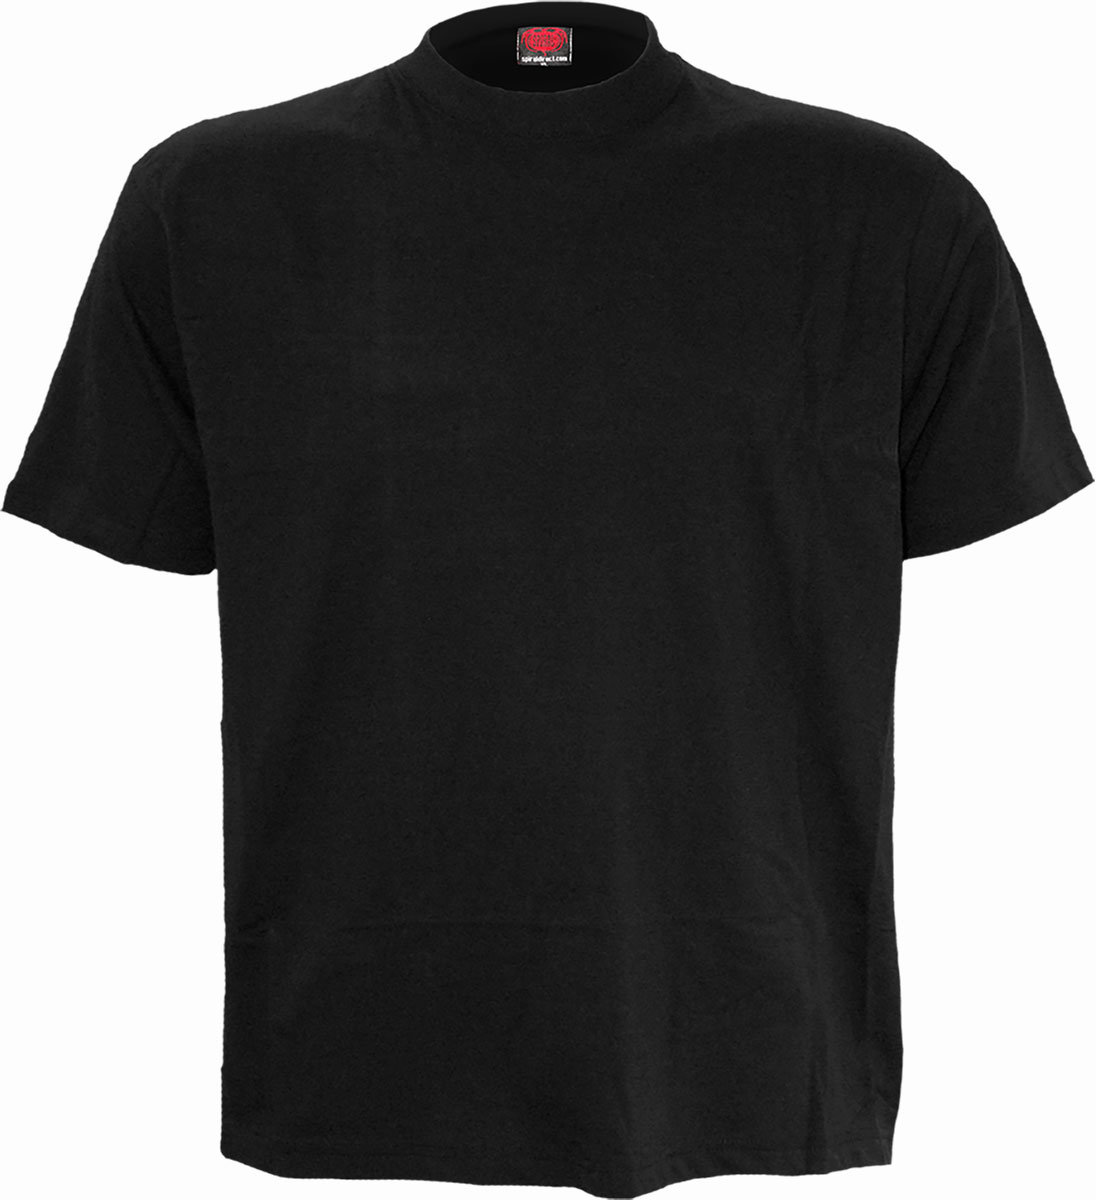 Urban Fashion Kids T-Shirt Black (Plain)